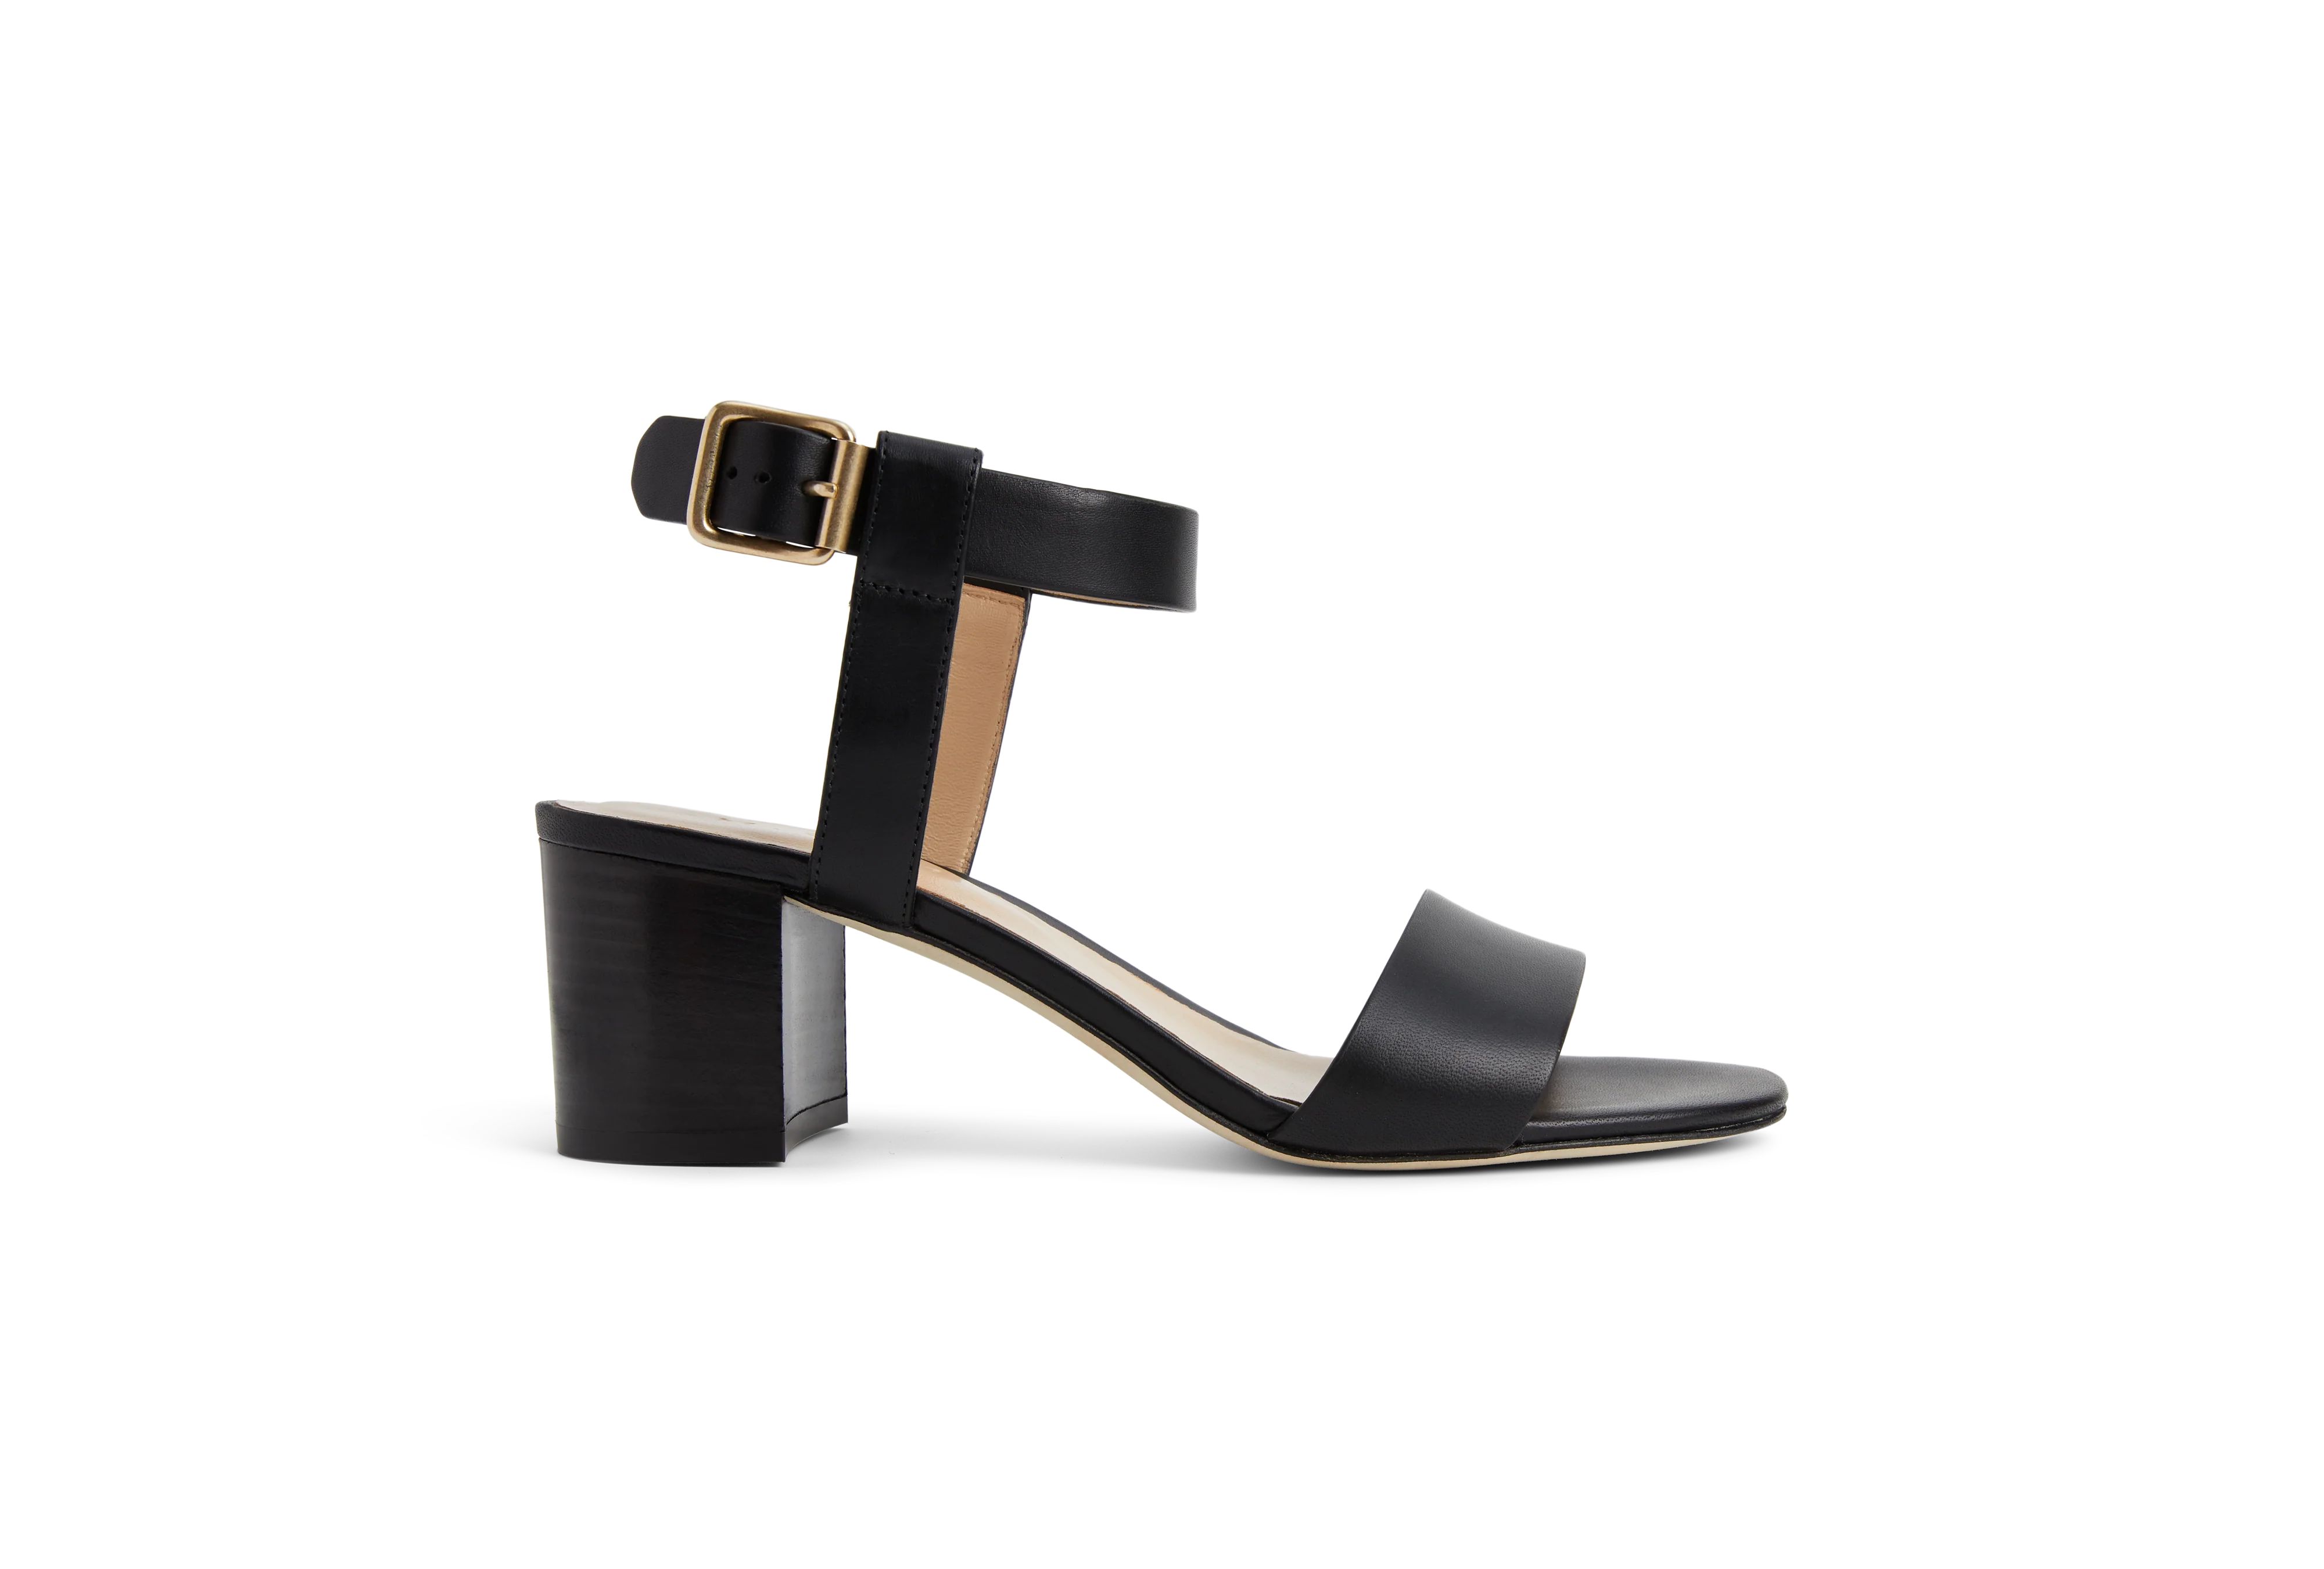 M.Gemi The Lume Women's Sandals, Size 35.5 in Black Leather | M.GEMI